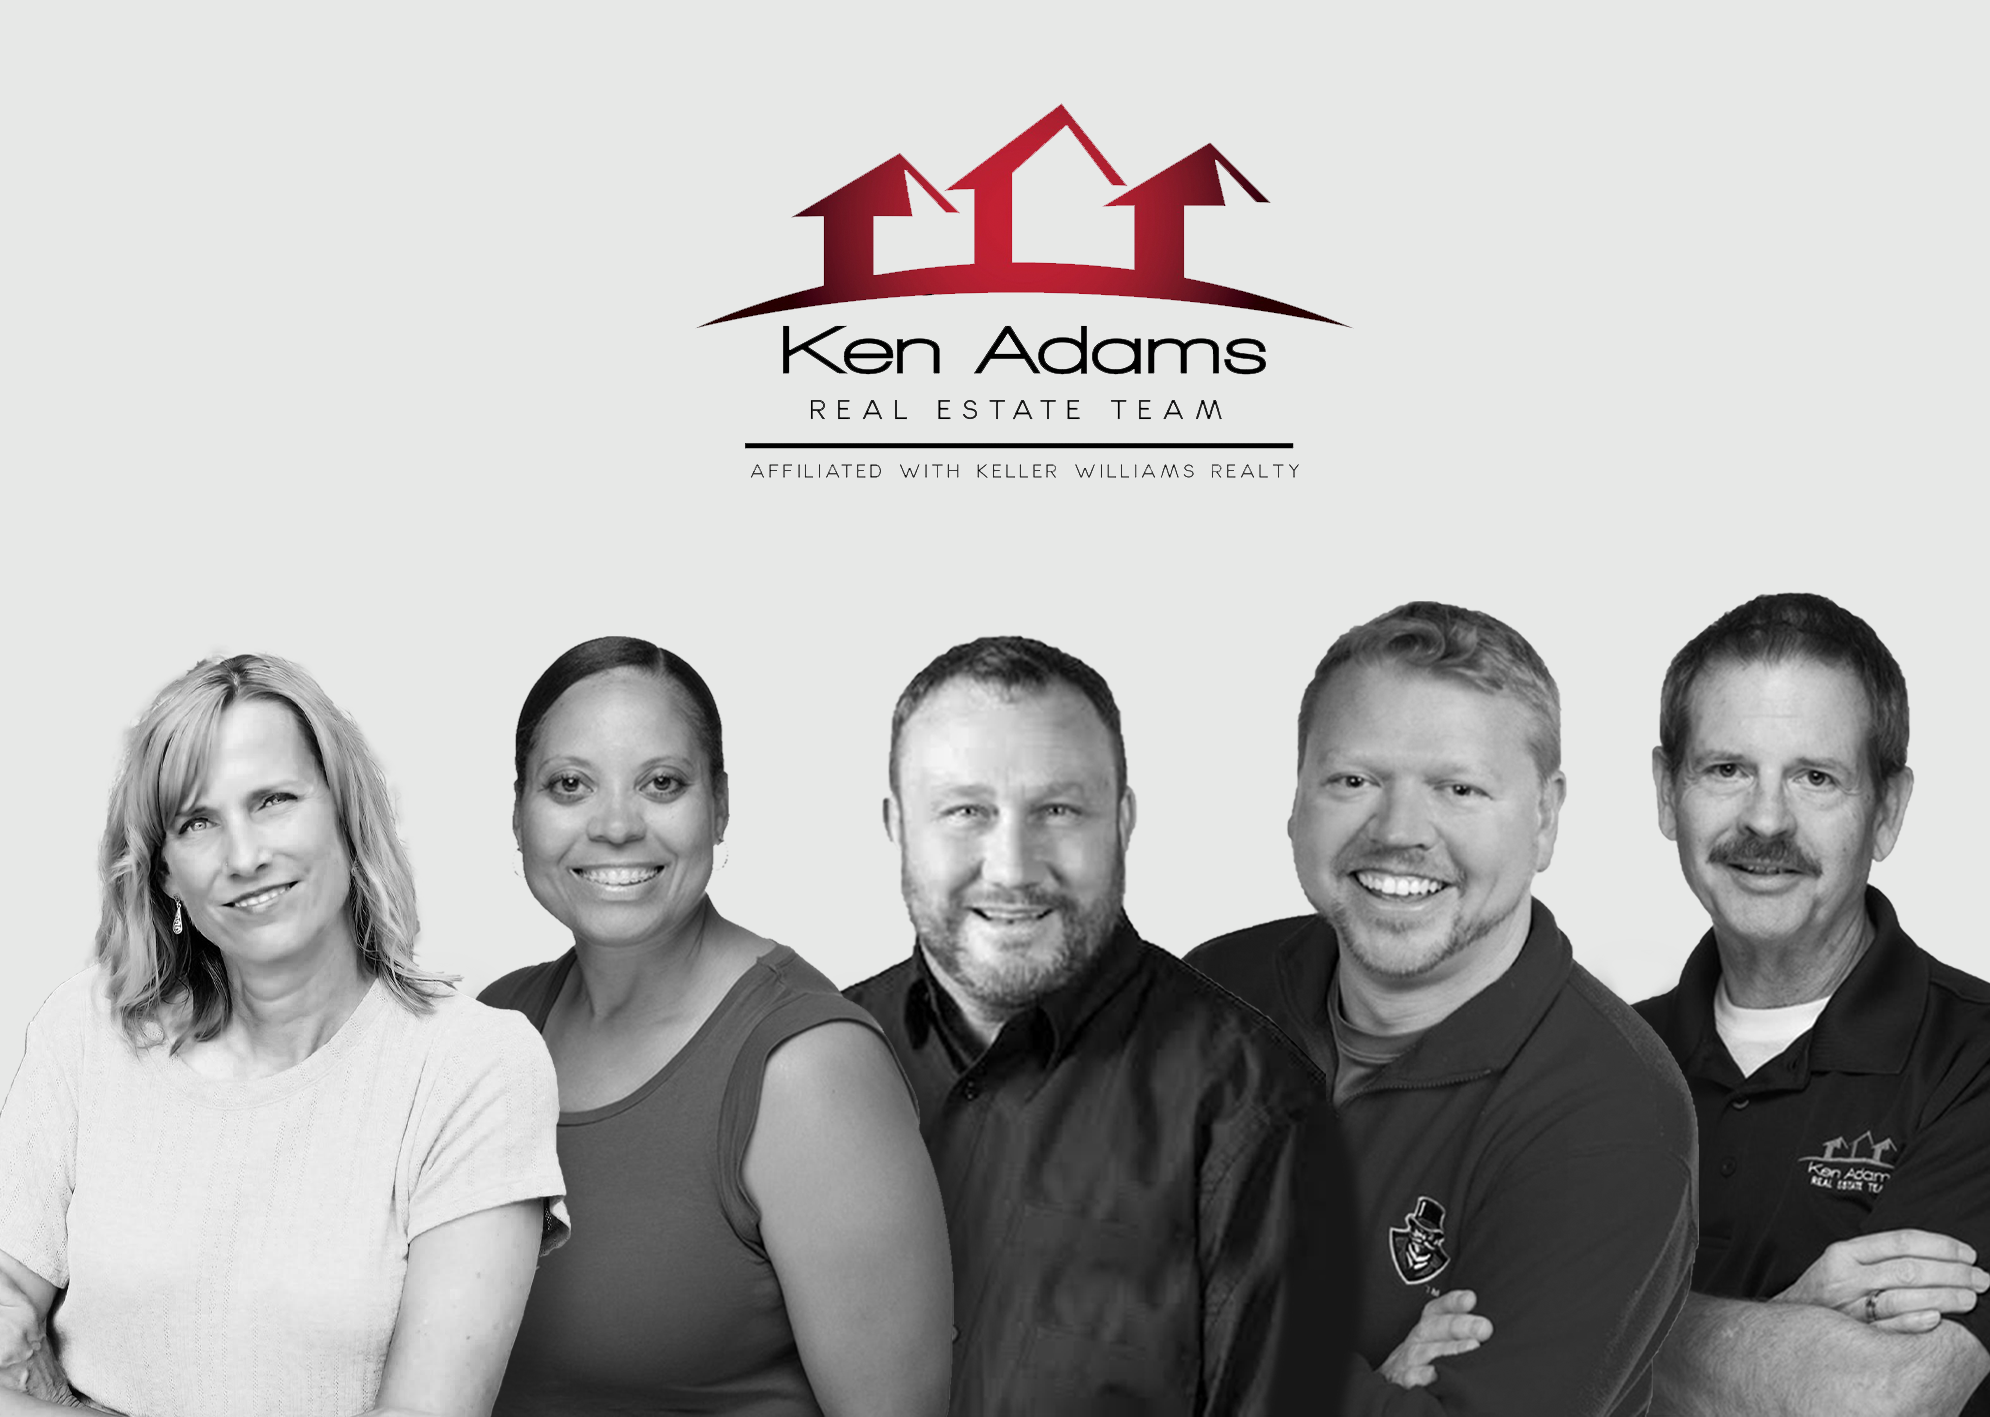 Keller Williams Realty Clarksville Ken Adams Real Estate Team